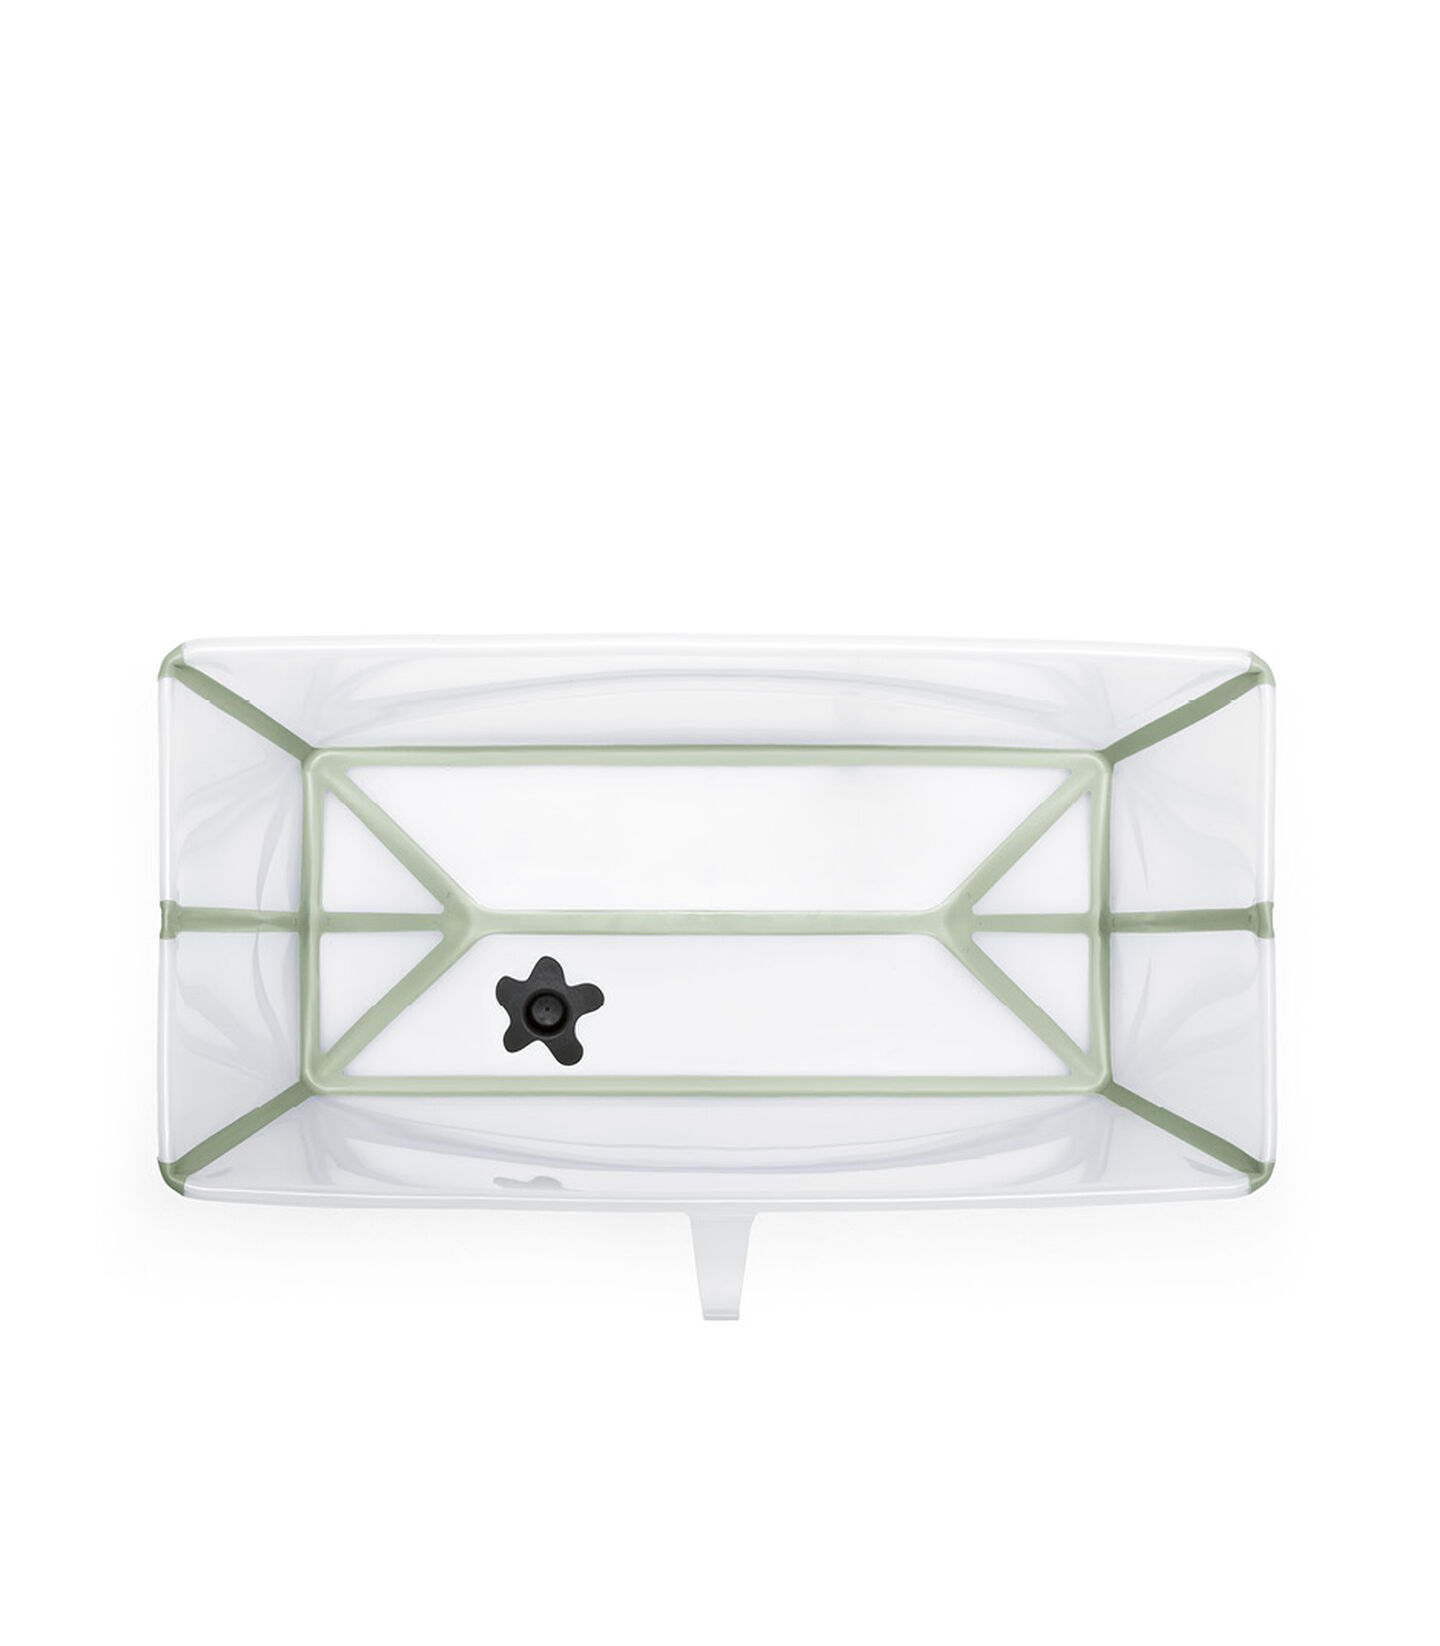 Stokke® Flexi Bath ® X-Large Verde trasparente, Verde trasparente, mainview view 6